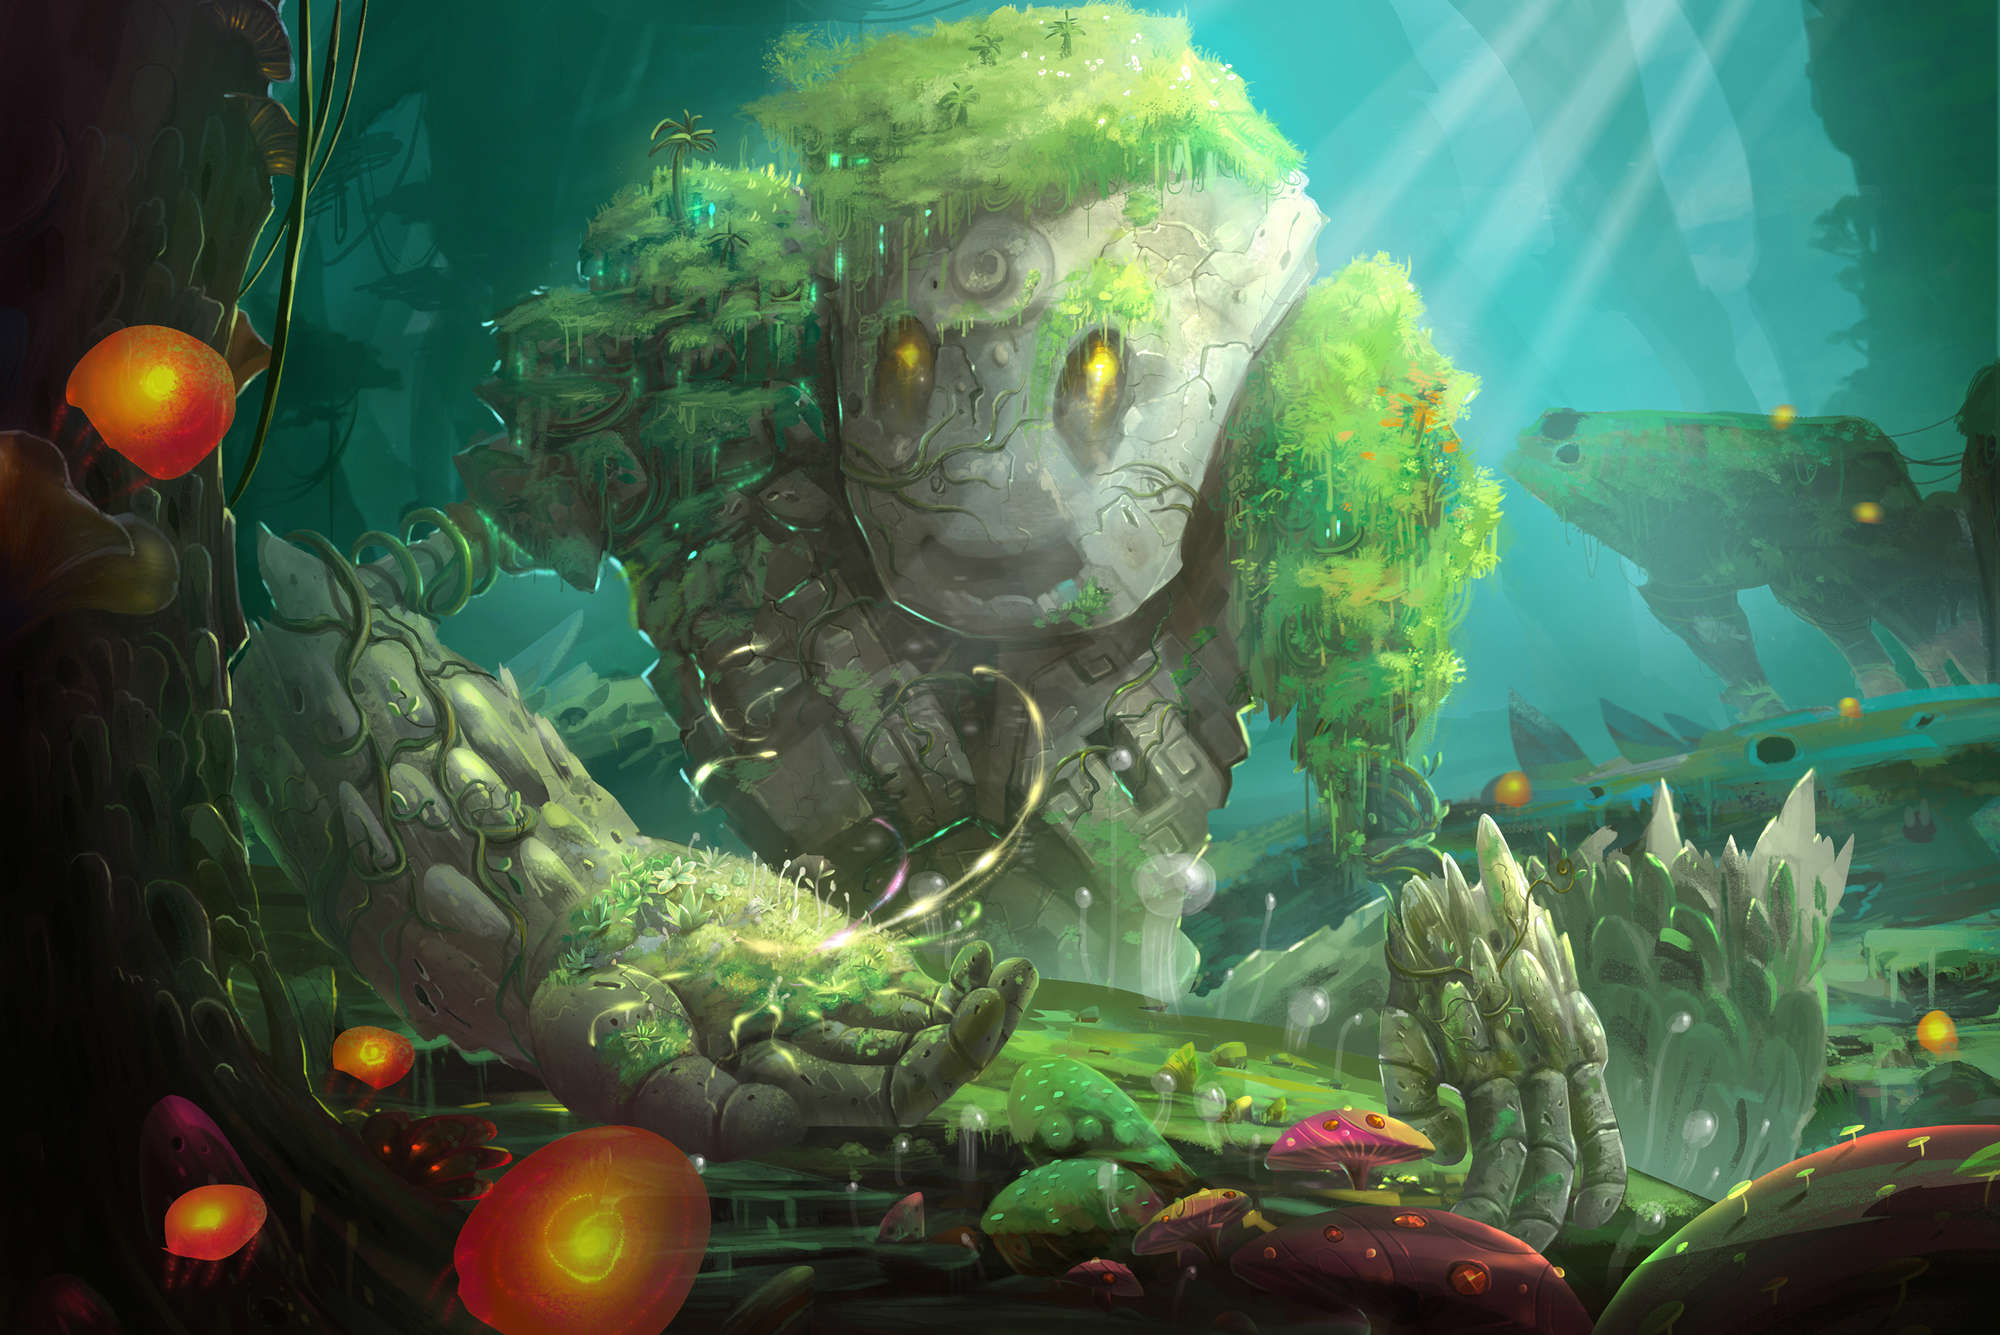             Fantasy mural forest creature on premium smooth nonwoven
        